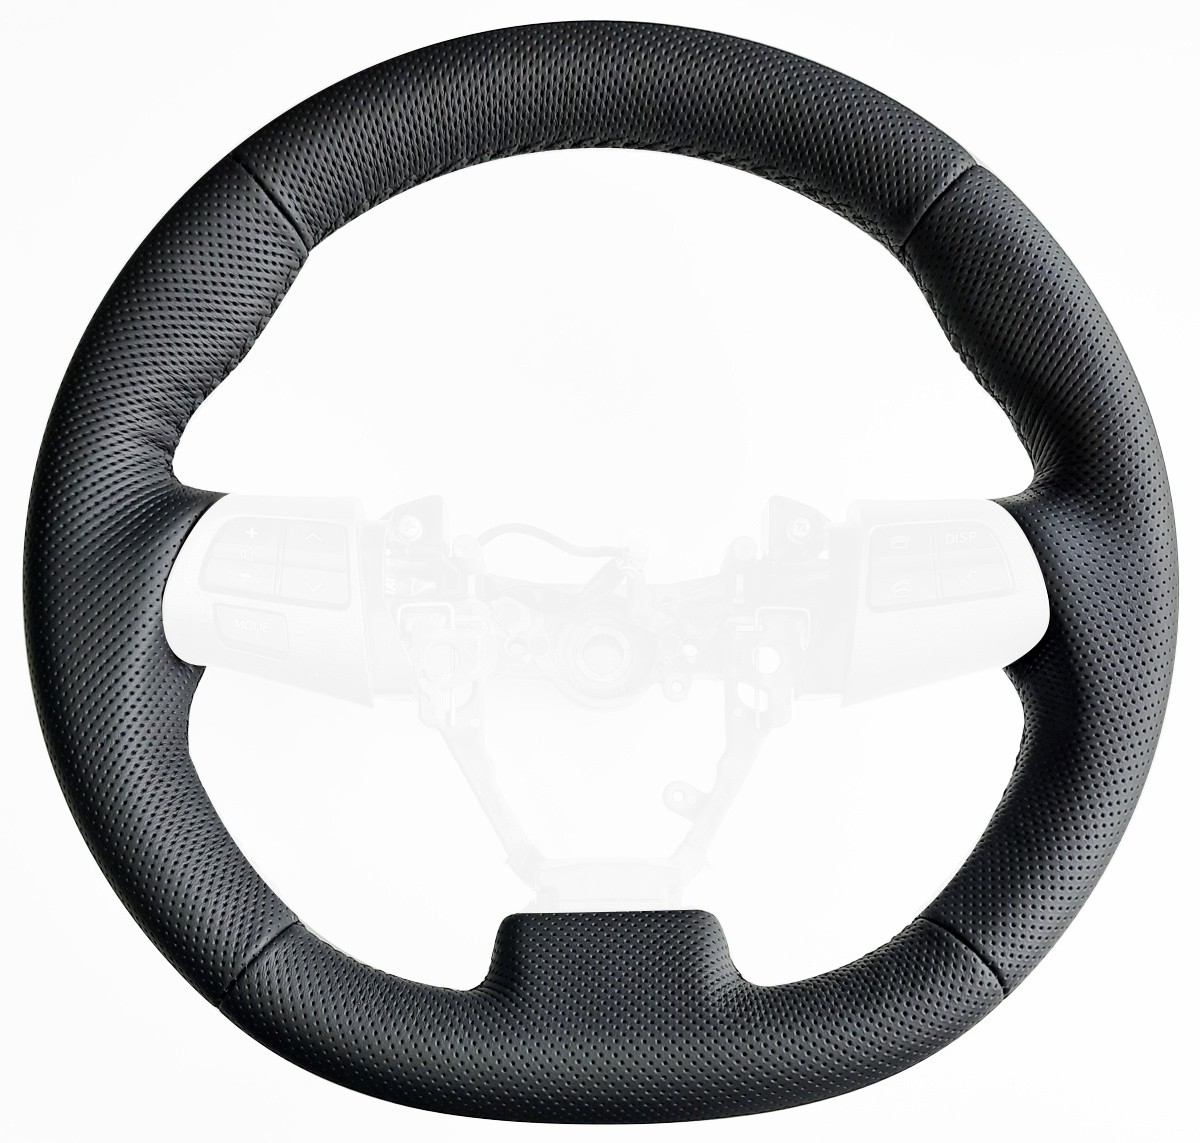 2008-14 Toyota Matrix steering wheel cover (2011-14)